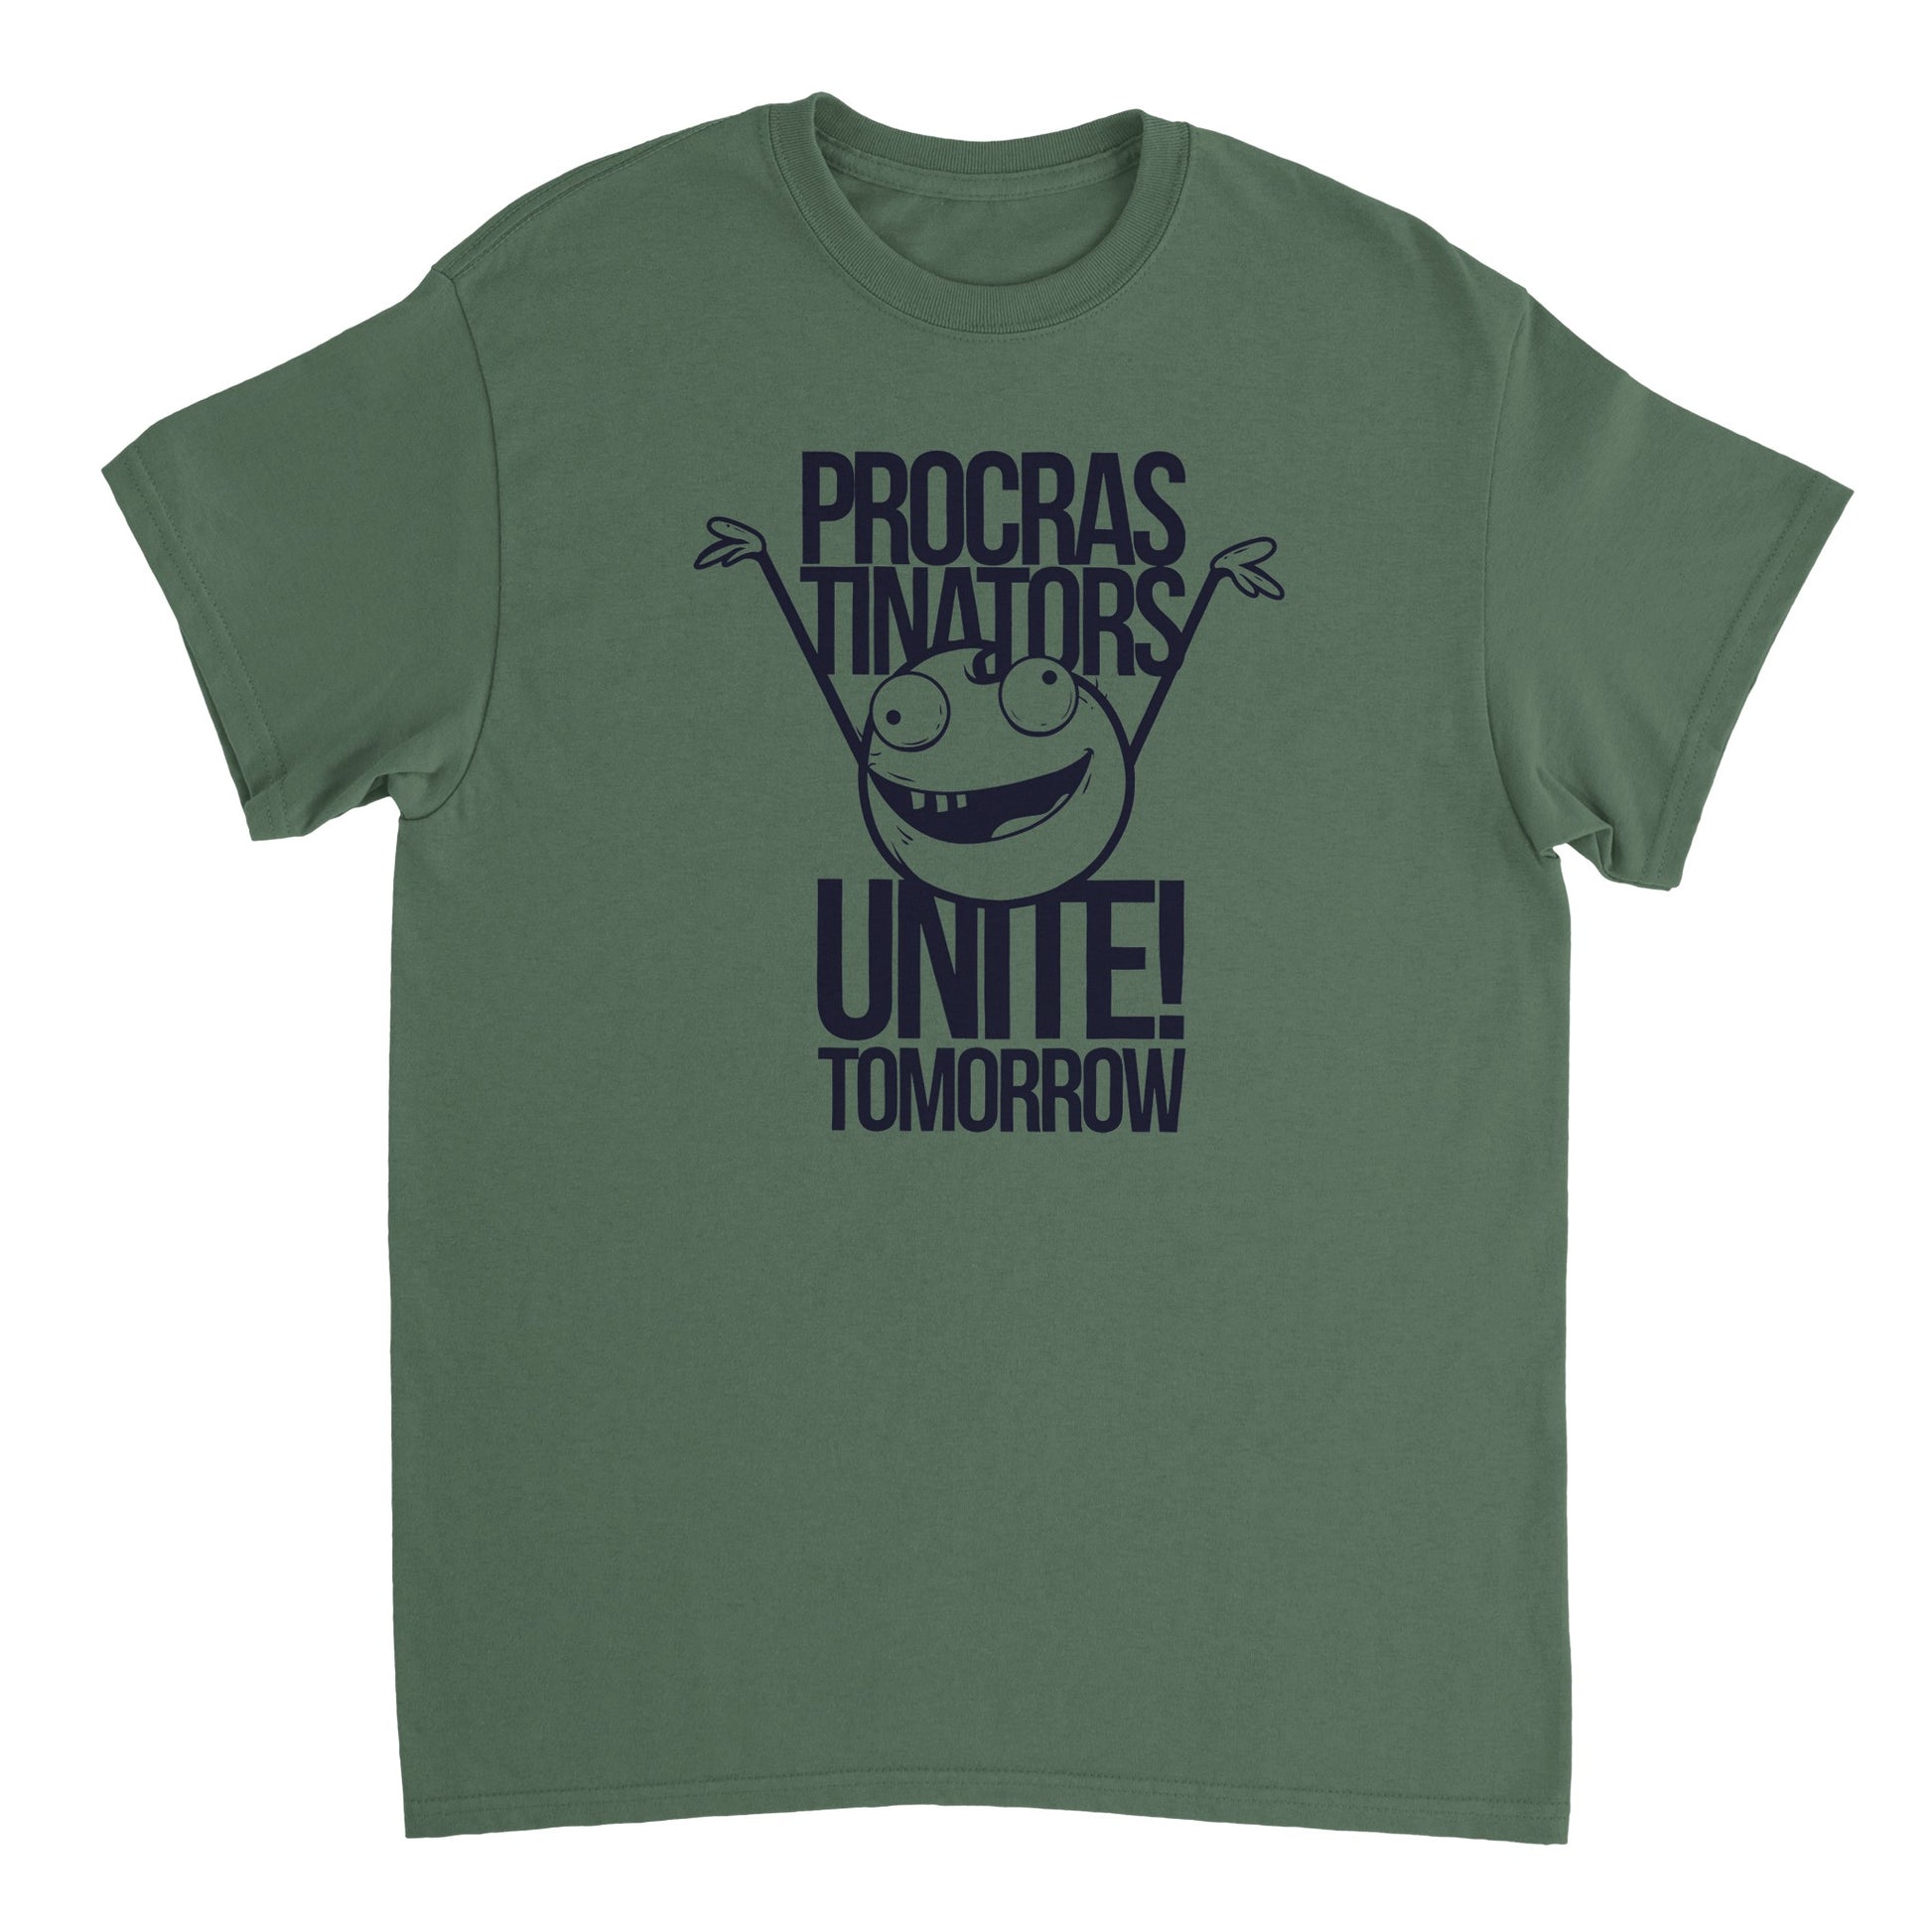 a green t - shirt with the words procras tinyators, united tomorrow